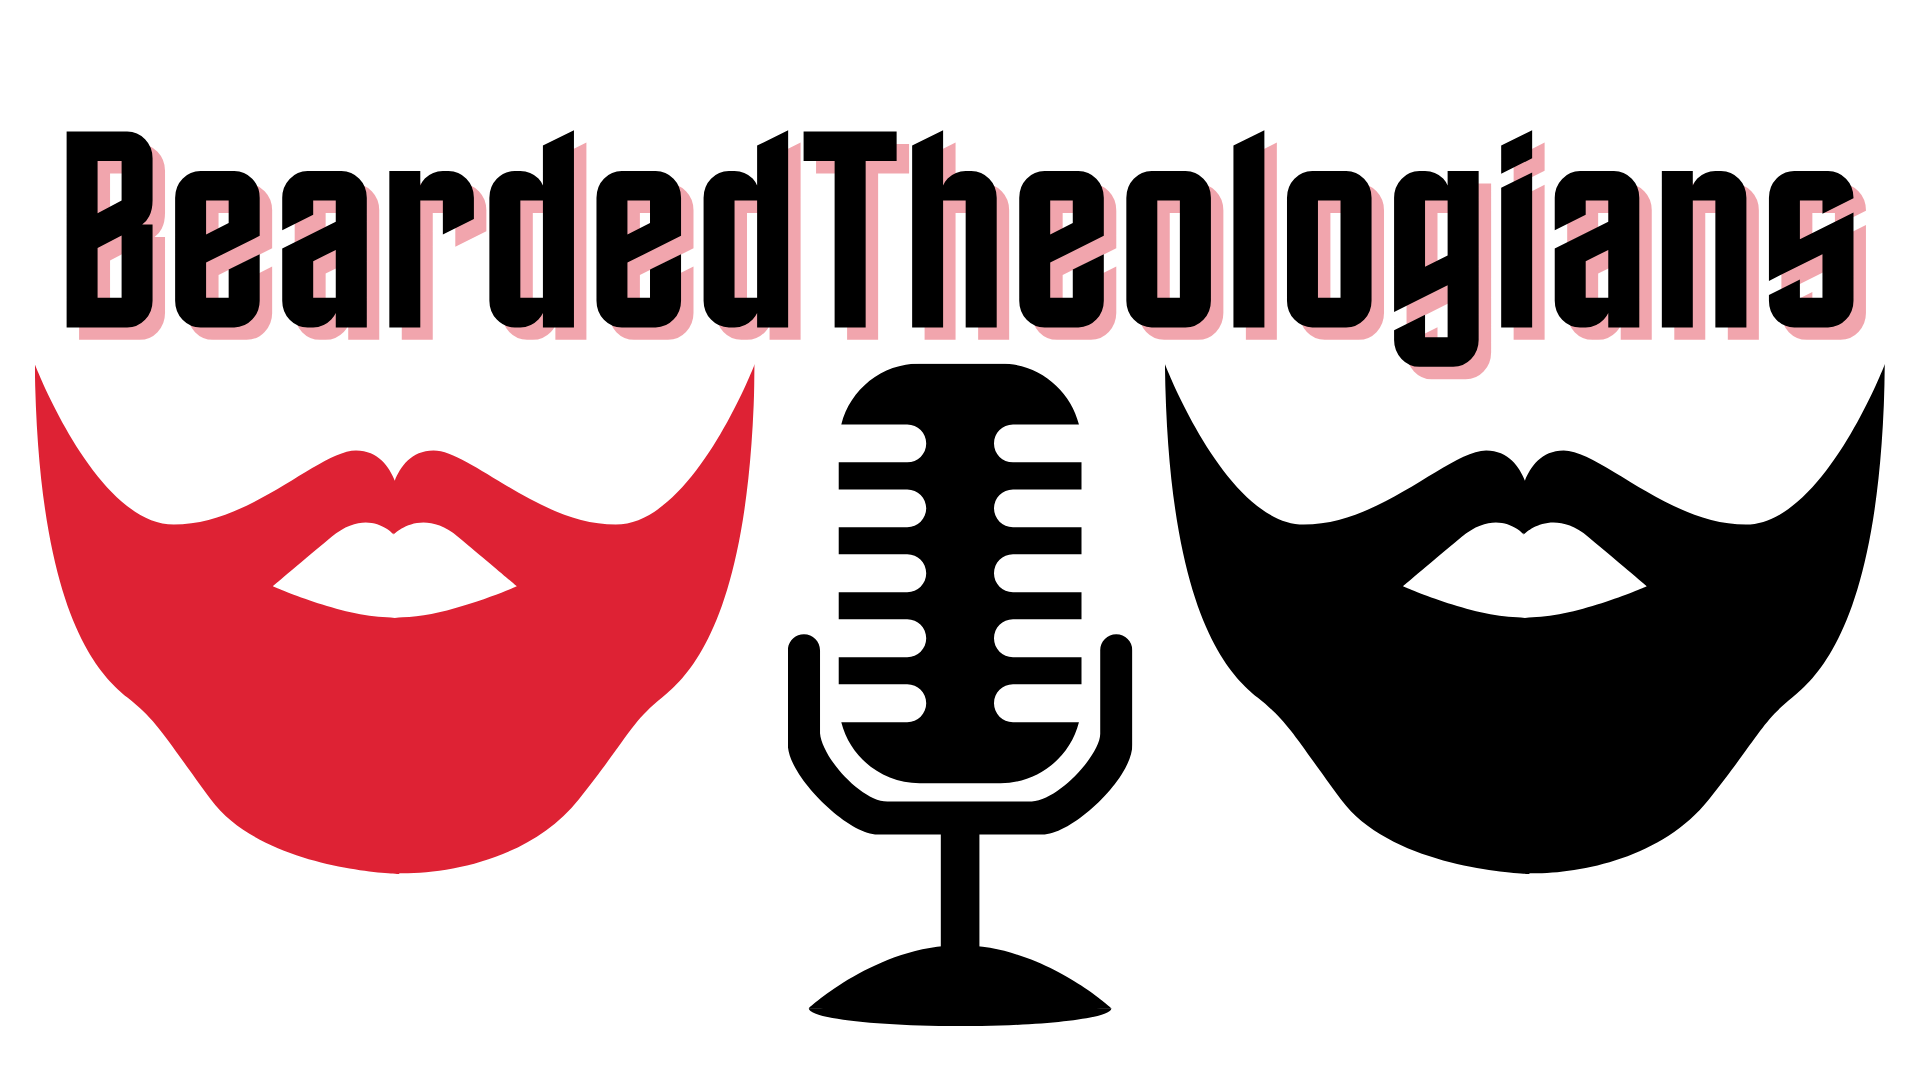 Bearded Theologians